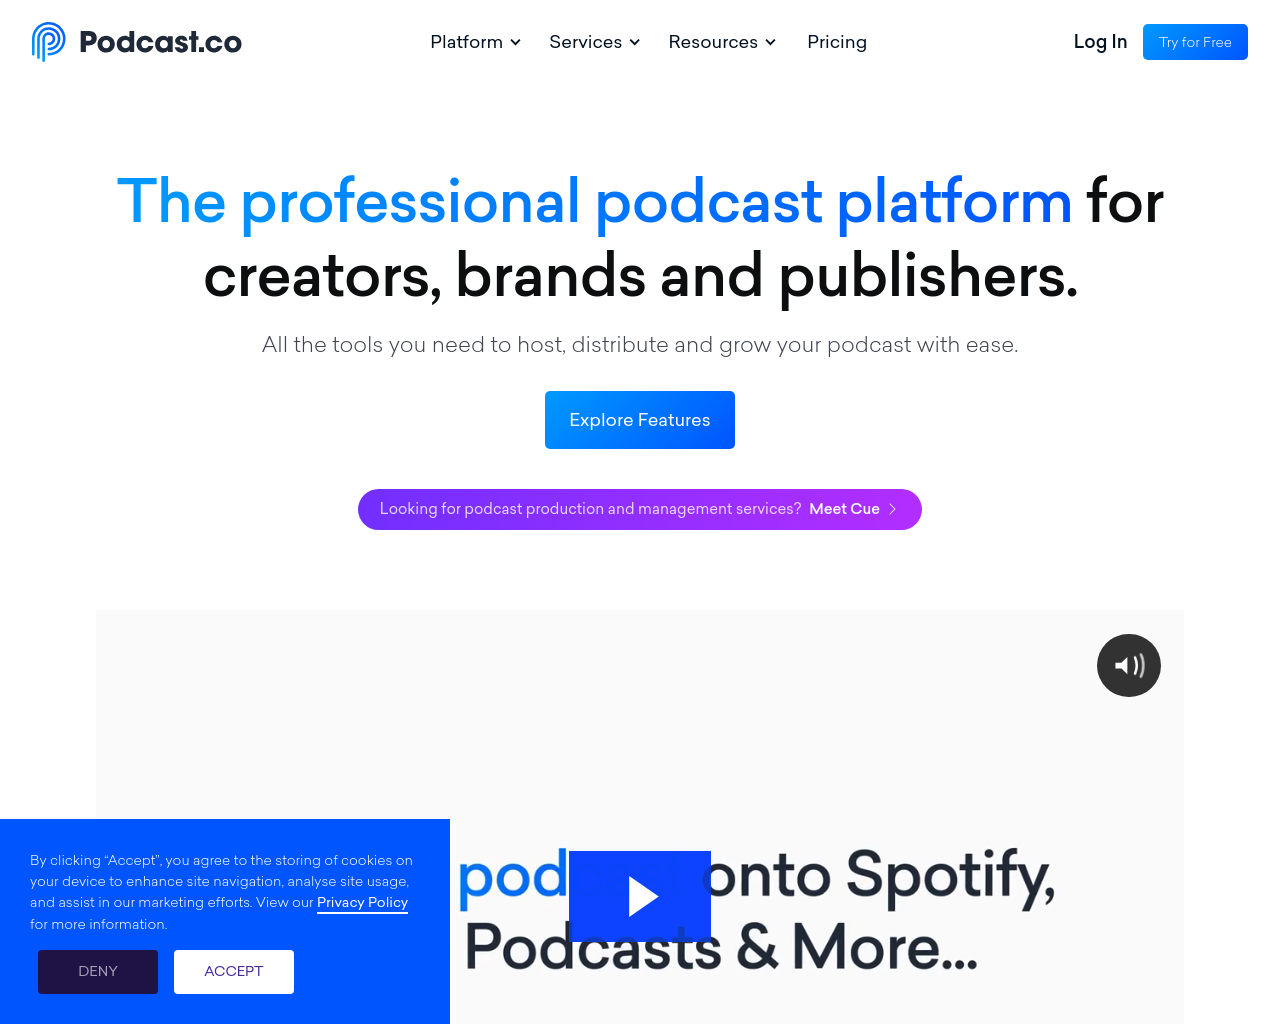 Podcastco homepage screenshot